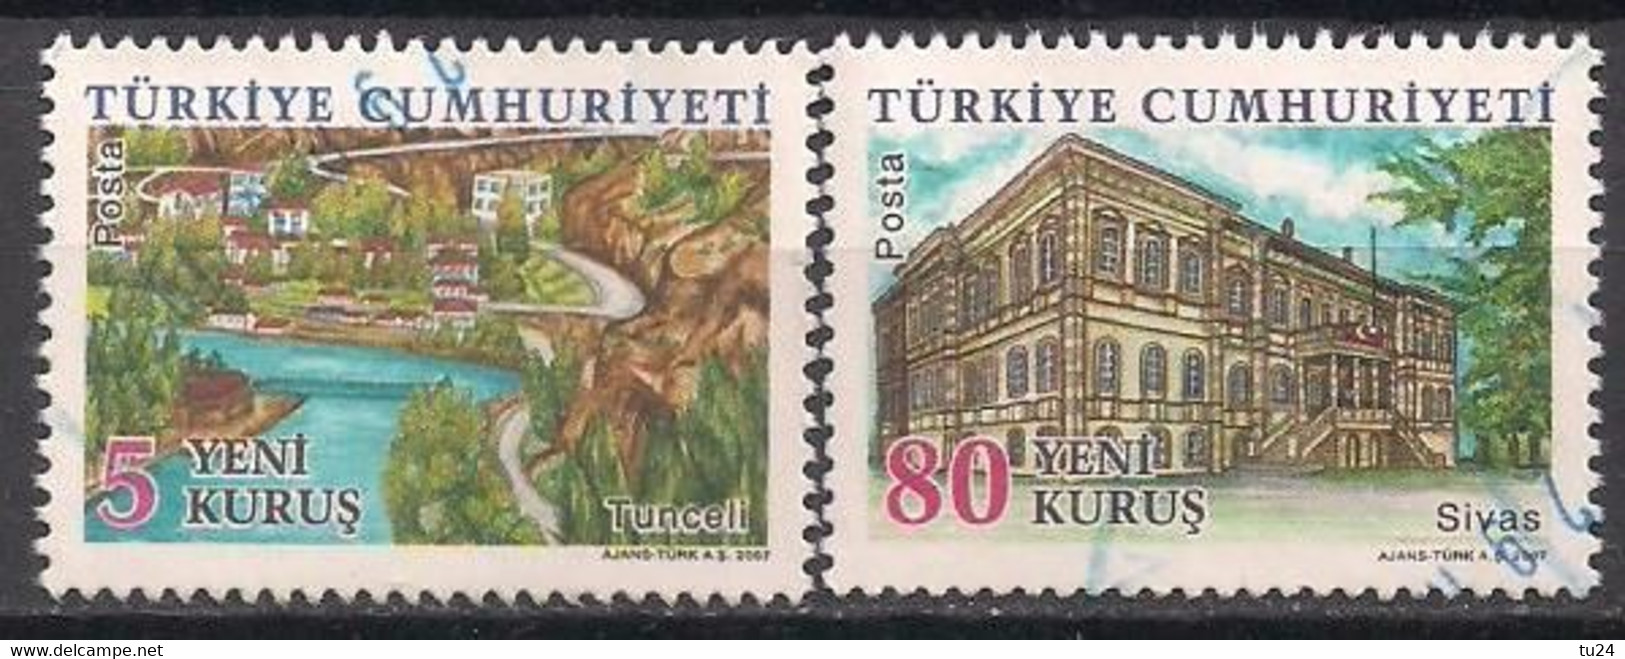 Türkei  (2007)  Mi.Nr.  3632 + 3636  Gest. / Used  (1cs11) - Usados